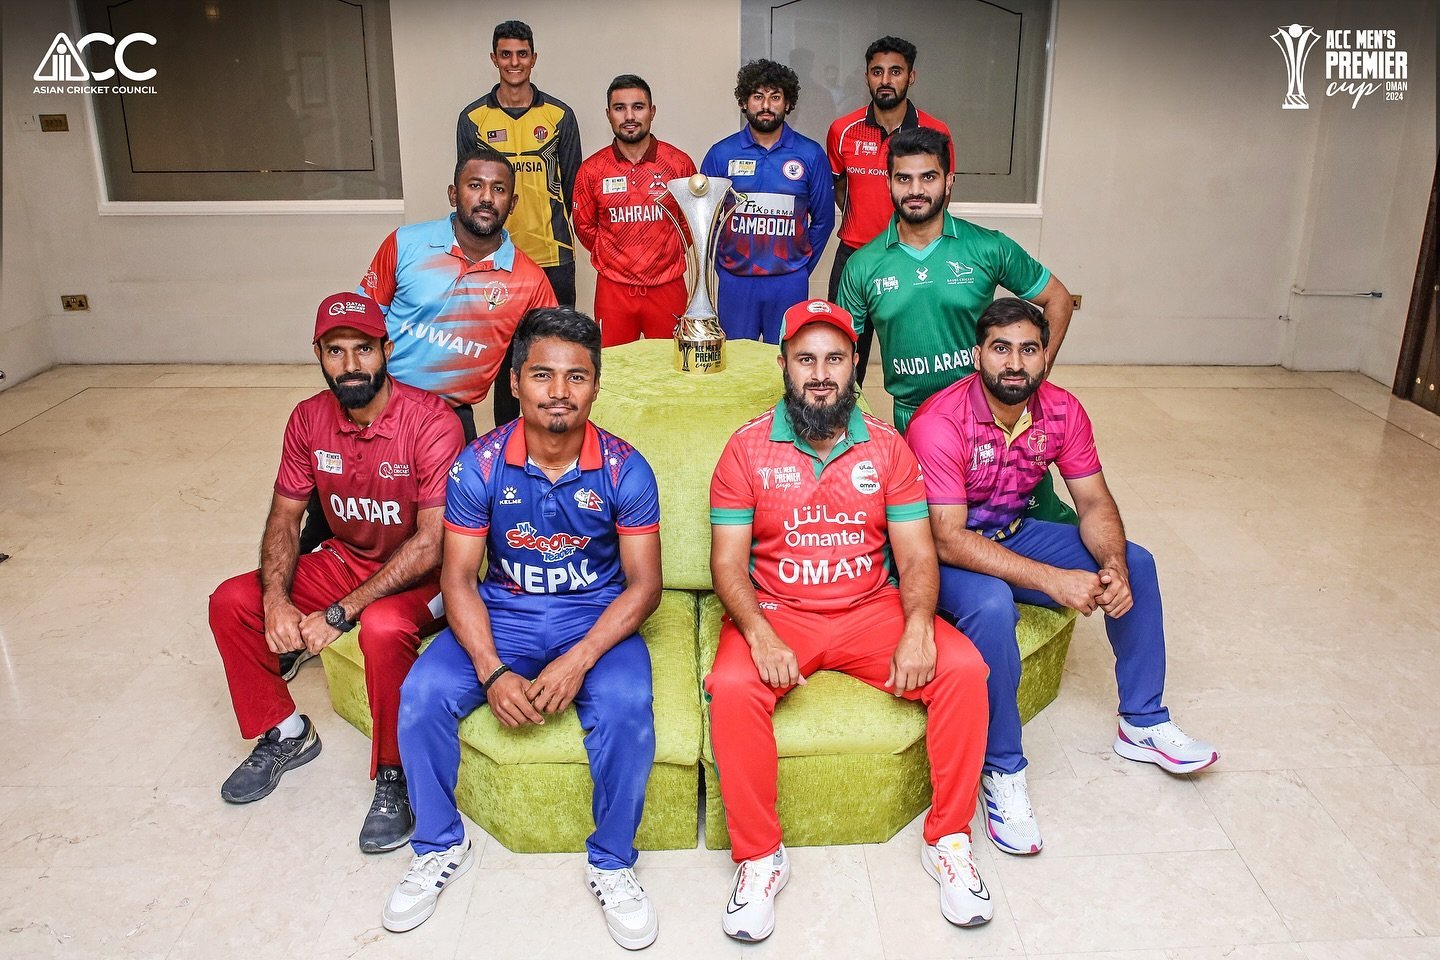 एसीसी प्रिमियर कप क्रिकेट : कतारले साउदीलाई हराएपछि नेपाल समूह विजेता बन्ने पक्का